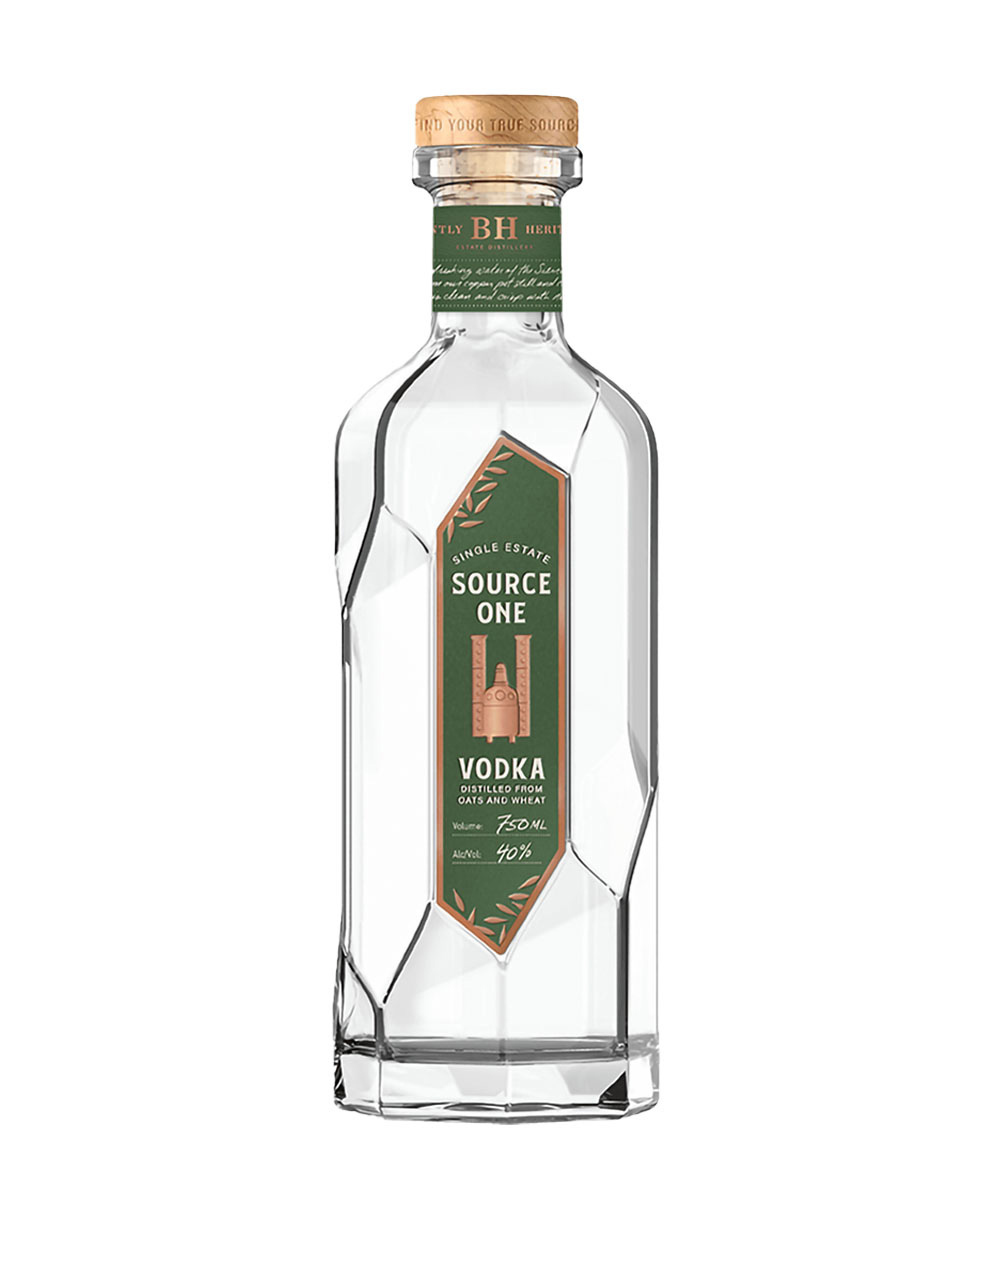 44 North Mountain Huckleberry Vodka